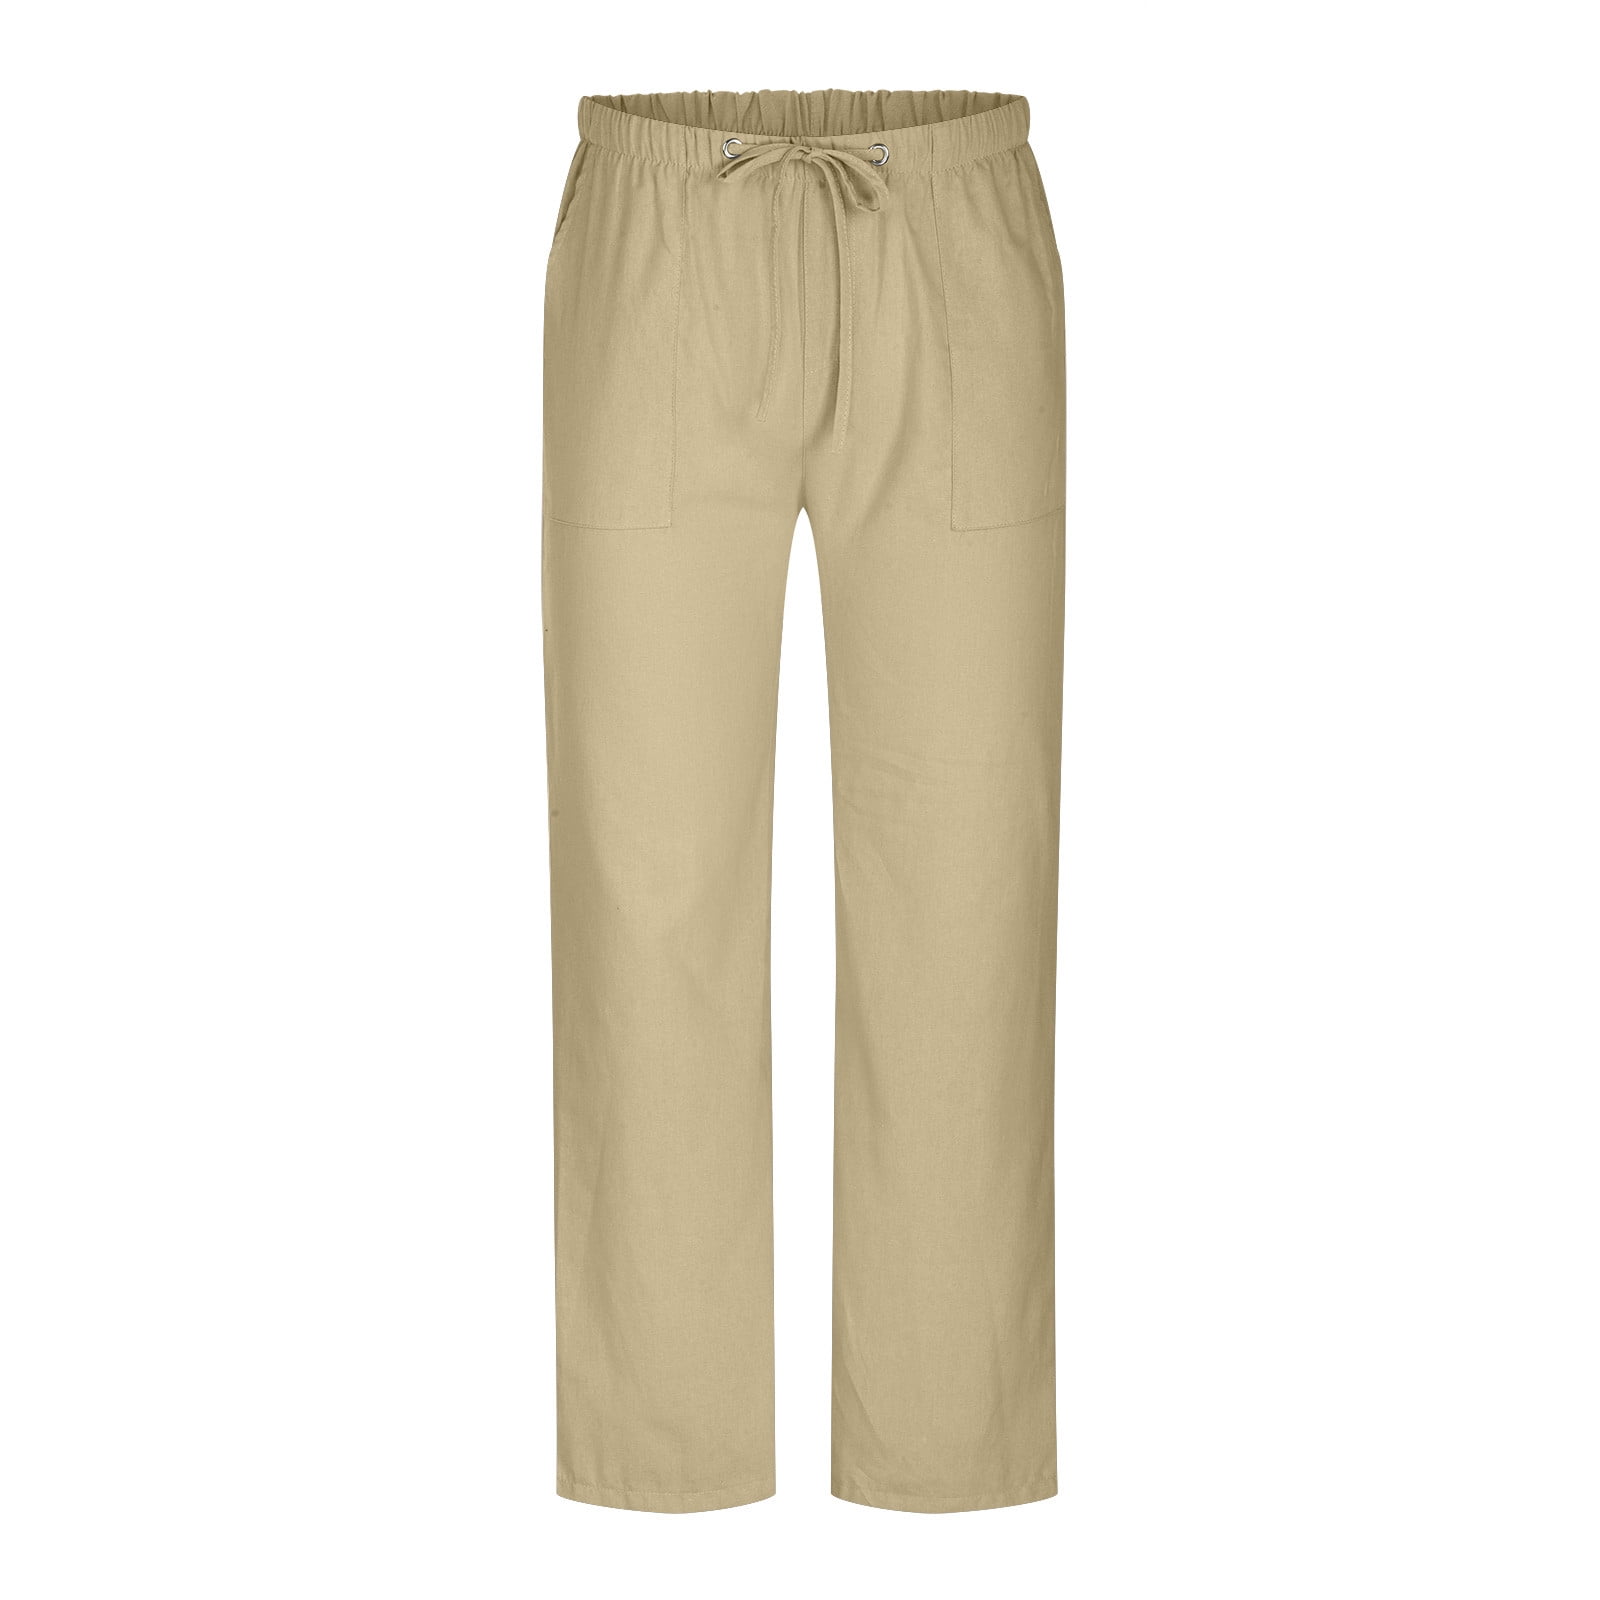 Men'S Drawstring Loose Linen Beach Pants Lightweight Elastic Waist Yoga  Lounge Cotton Trousers Pajamas Khaki Xl O482 